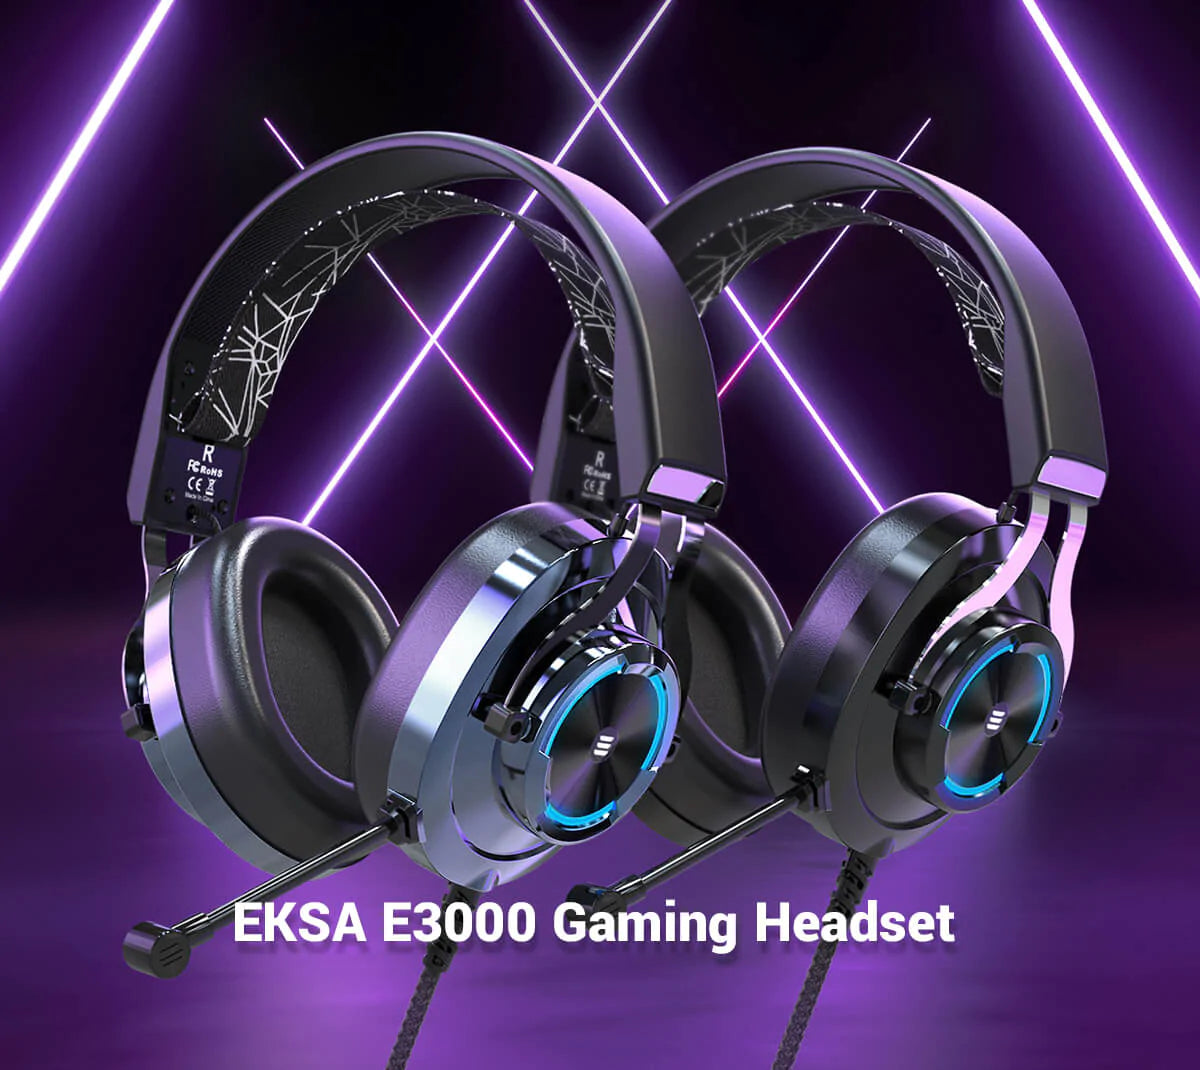 EKSA E3000 Gaming Headset with RGB light